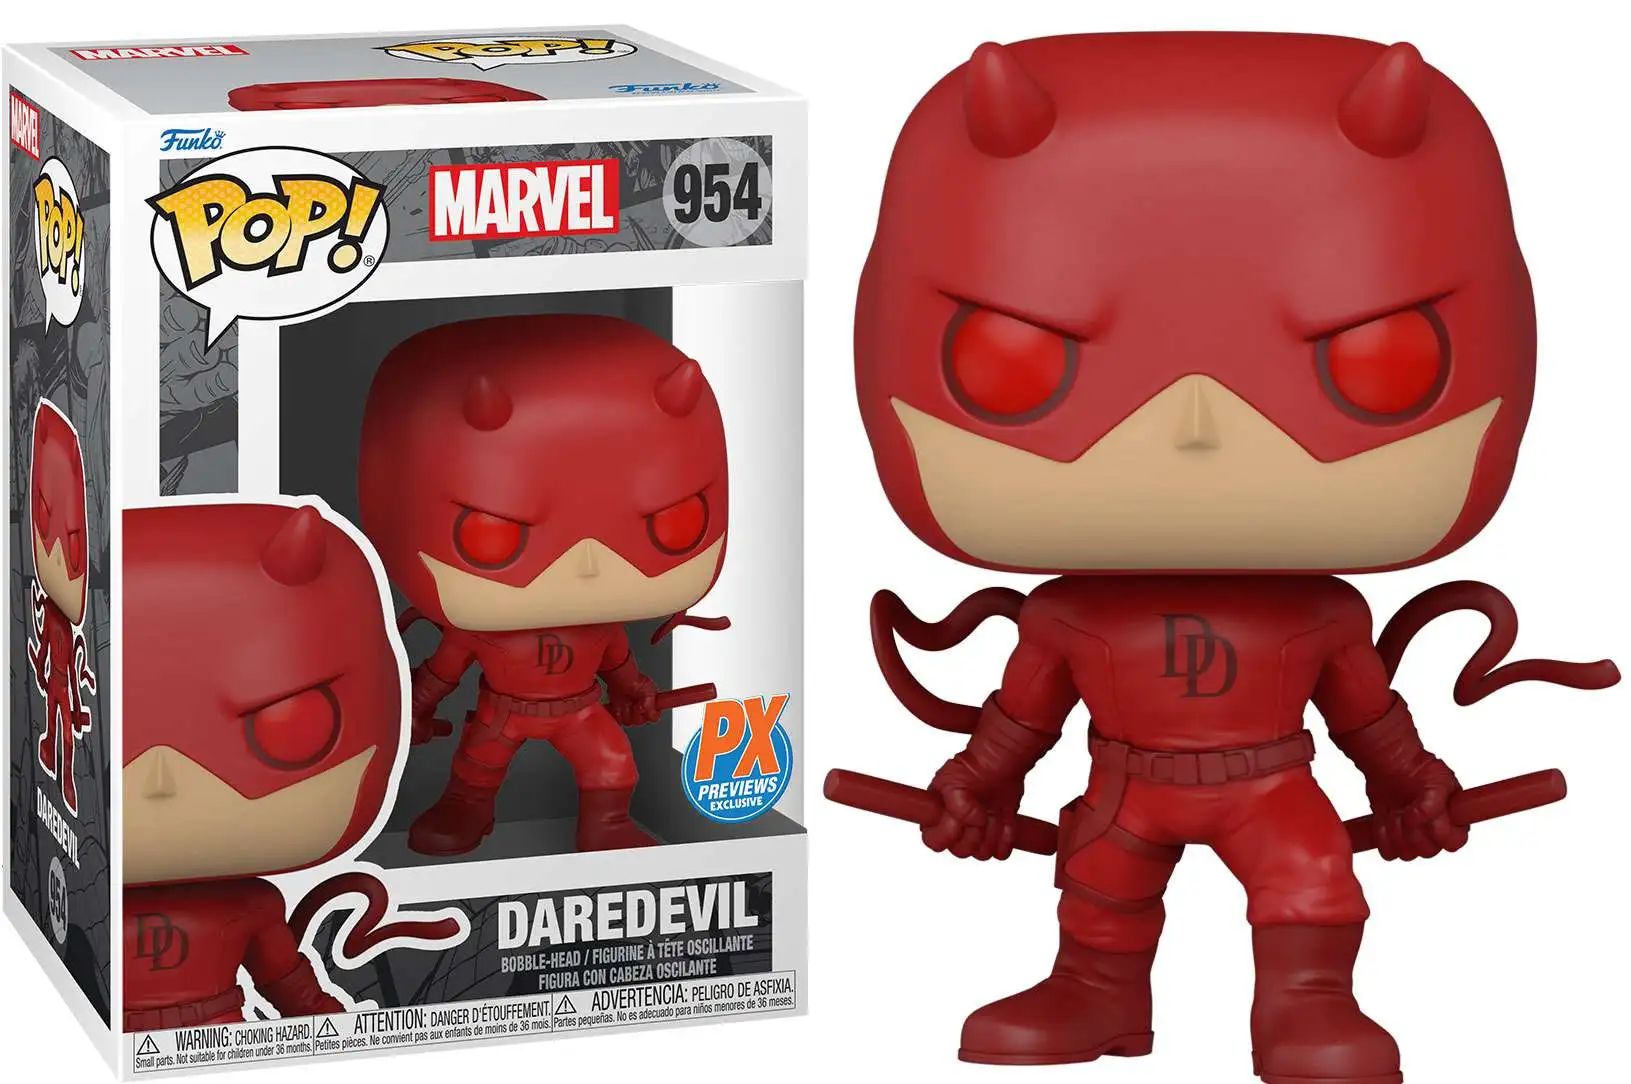 Daredevil Red Suit #214 Funko Pop Marvel Vinyl Figure Toy Netflix Season 2